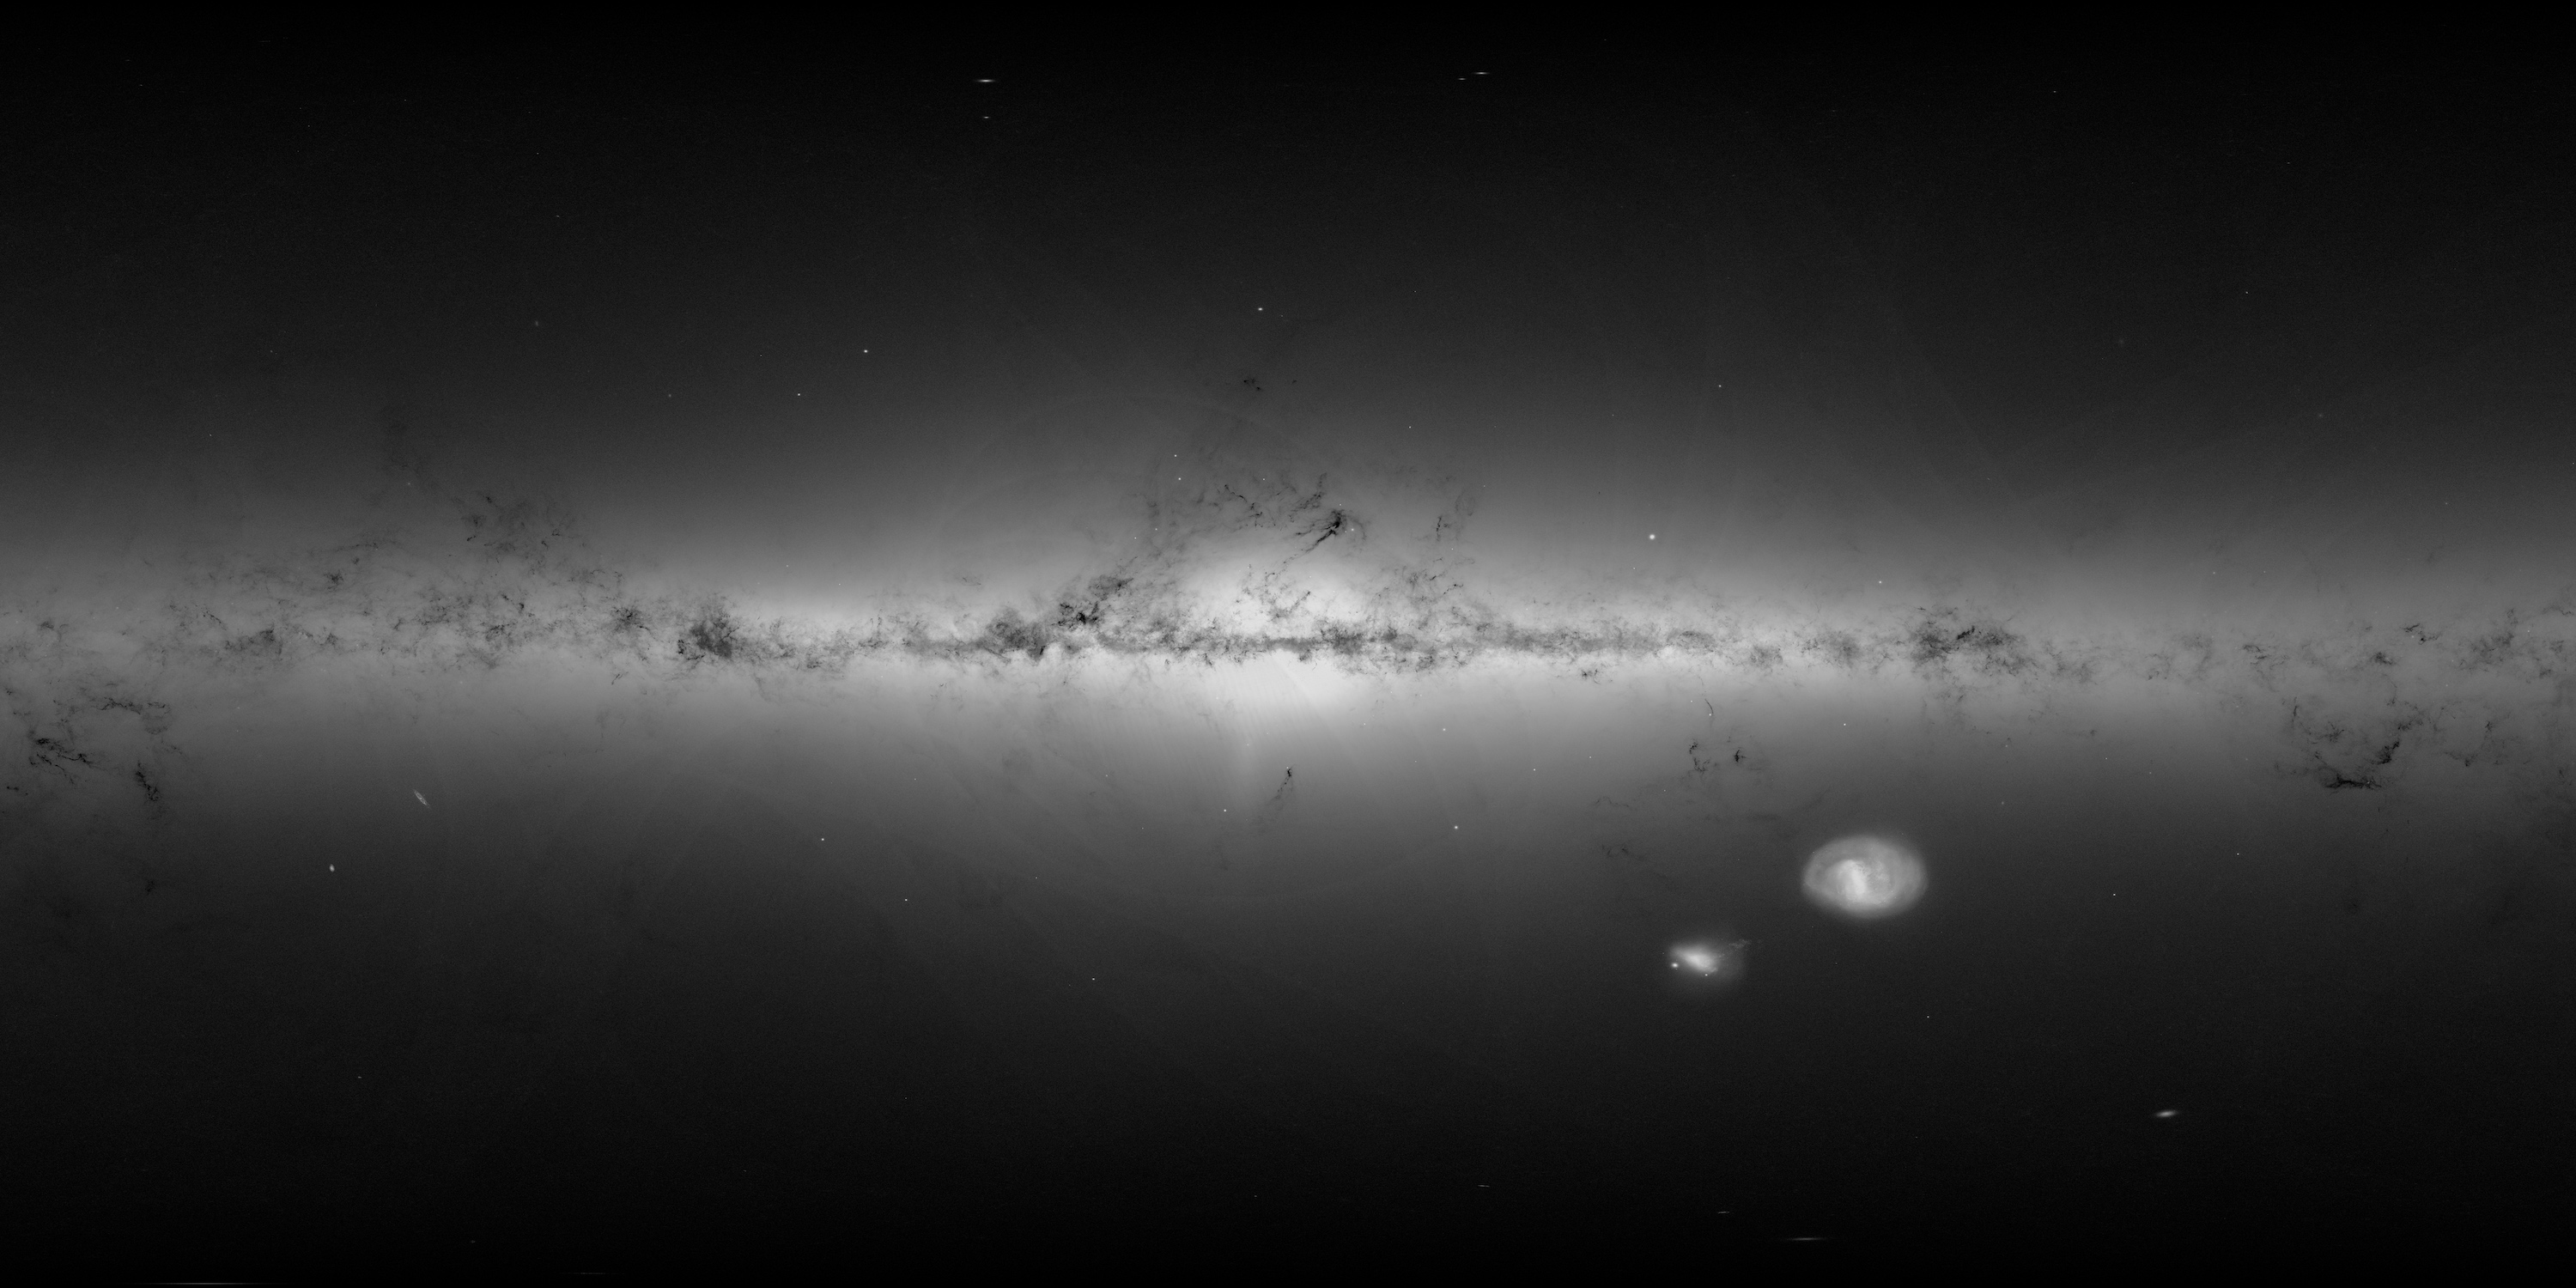 Galaxies naines autour de la Voie lactée. © ESA, Gaia, DPAC, CC BY-SA 3.0 IGO